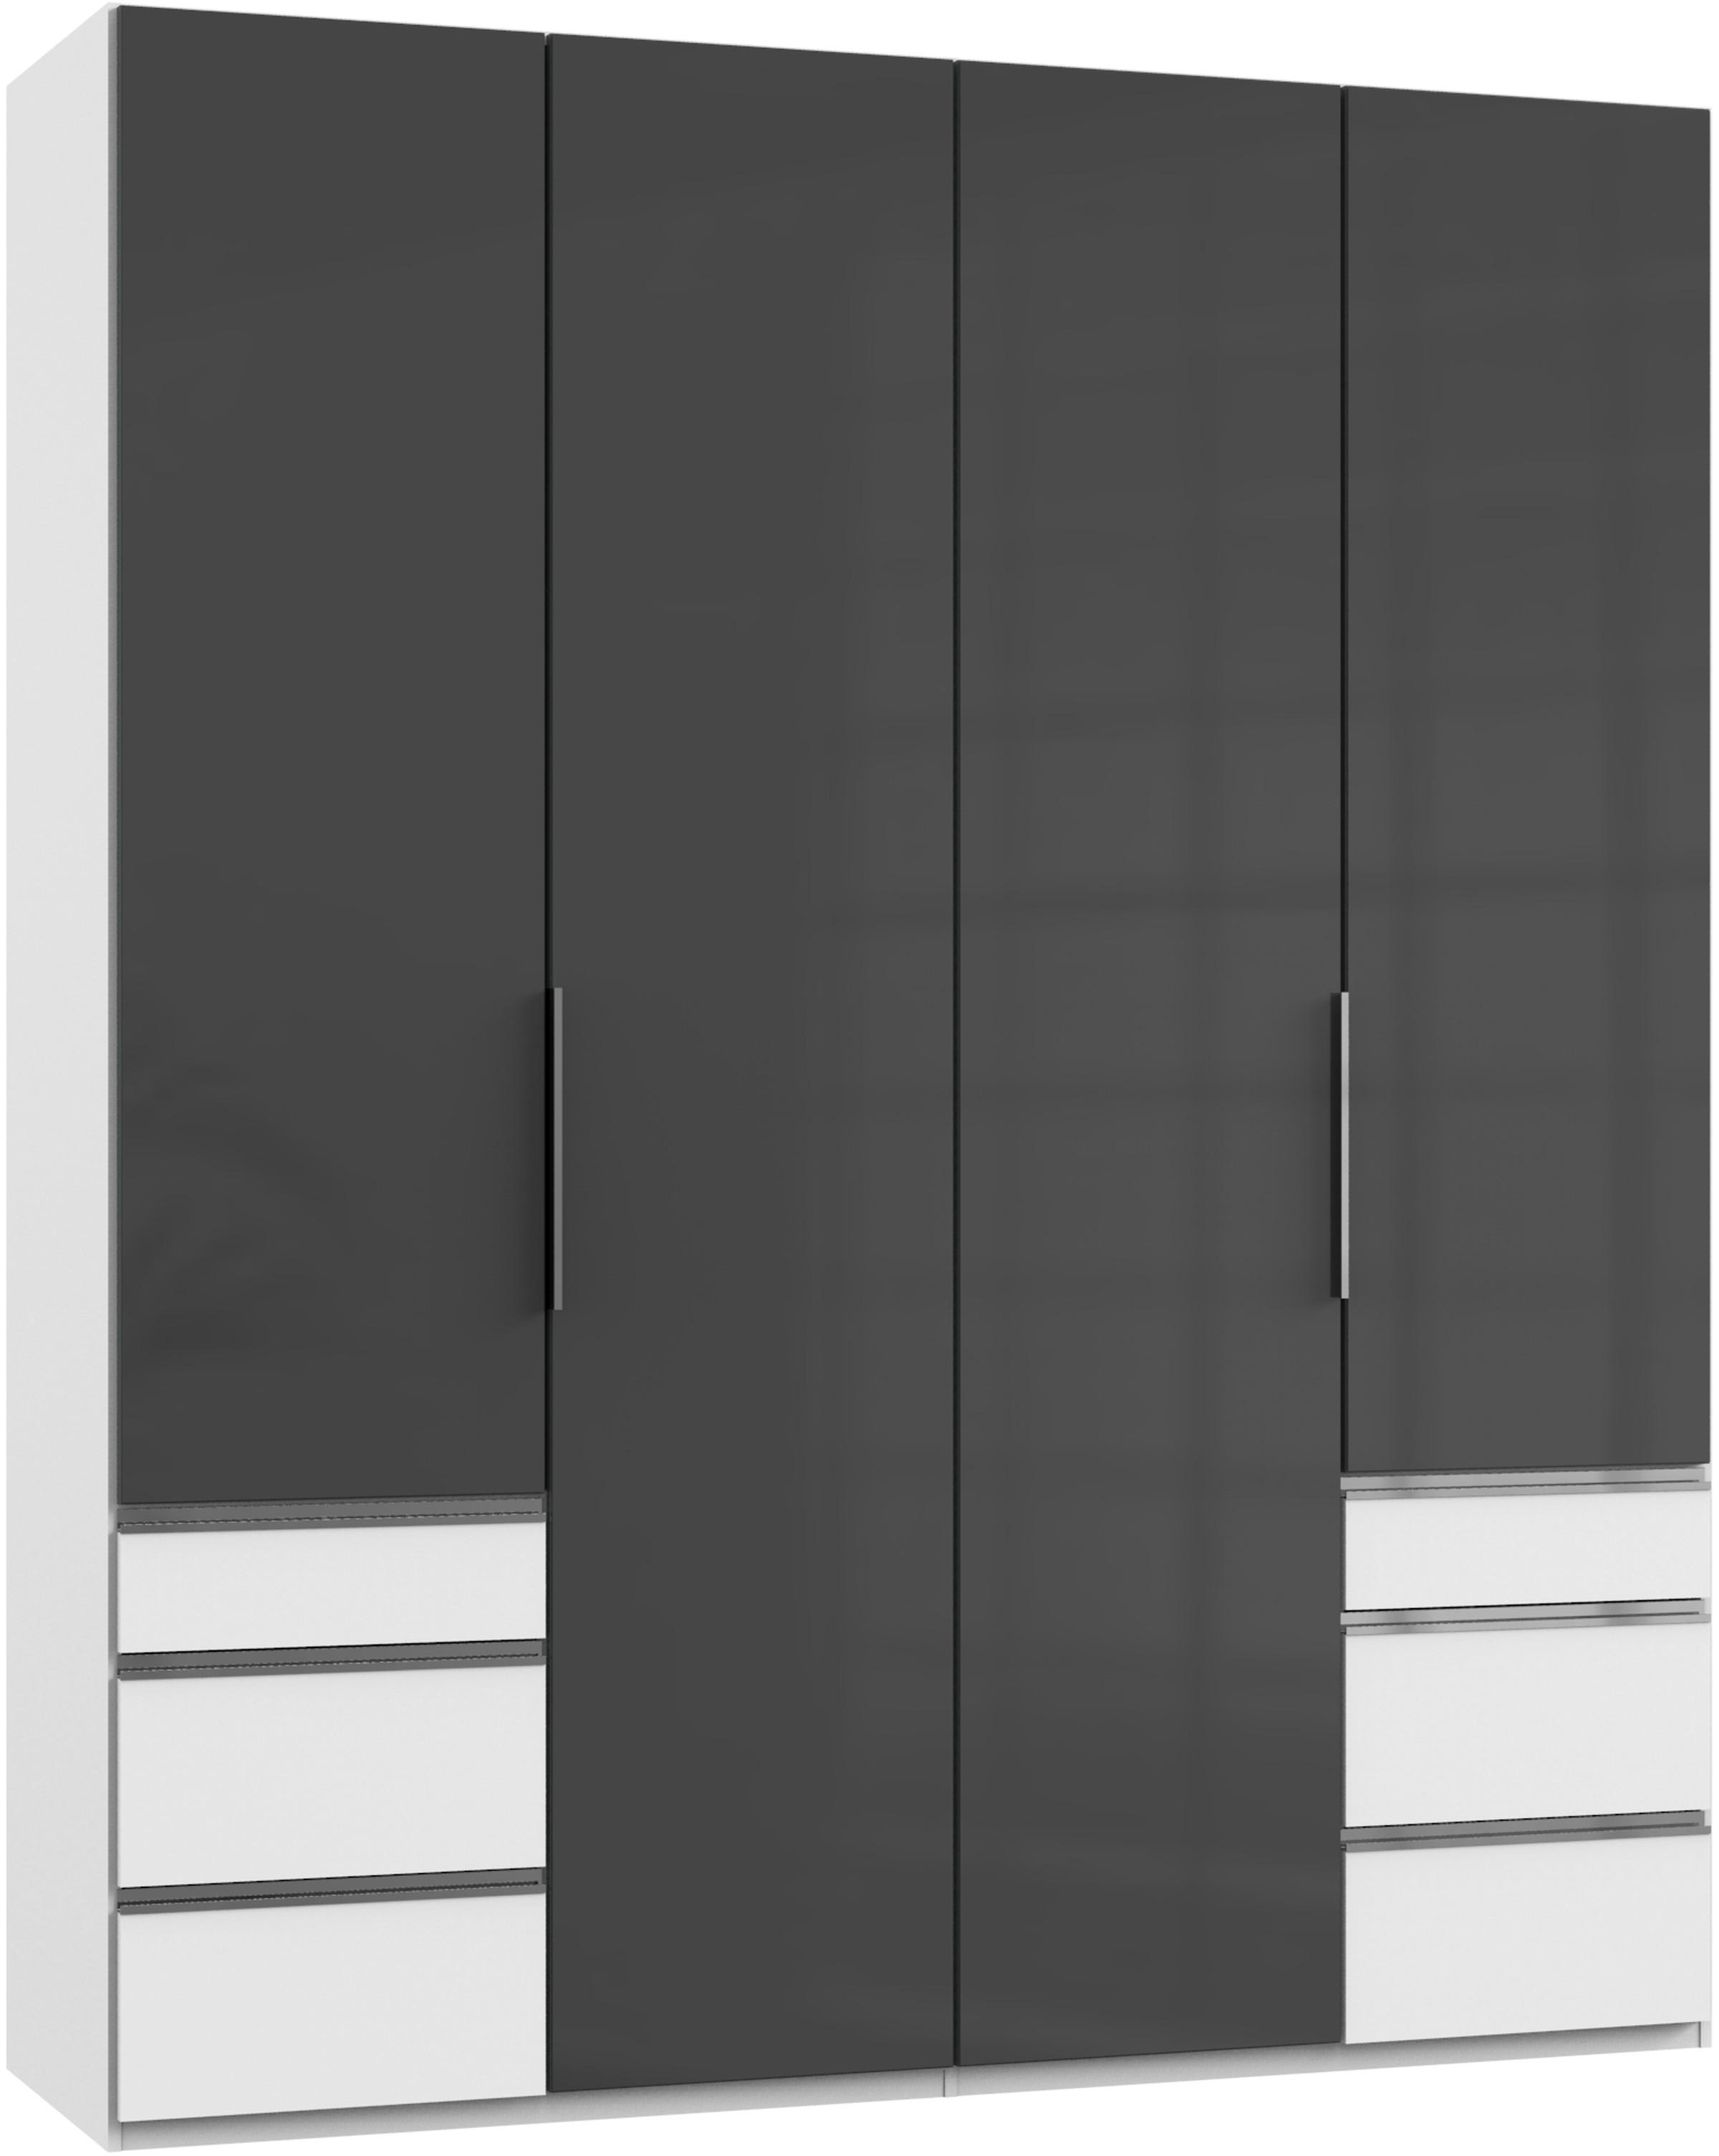 DREHTÜRENSCHRANK 4-türig Grau, Weiß  - Chromfarben/Weiß, MODERN, Glas/Holzwerkstoff (200/236/58cm) - MID.YOU